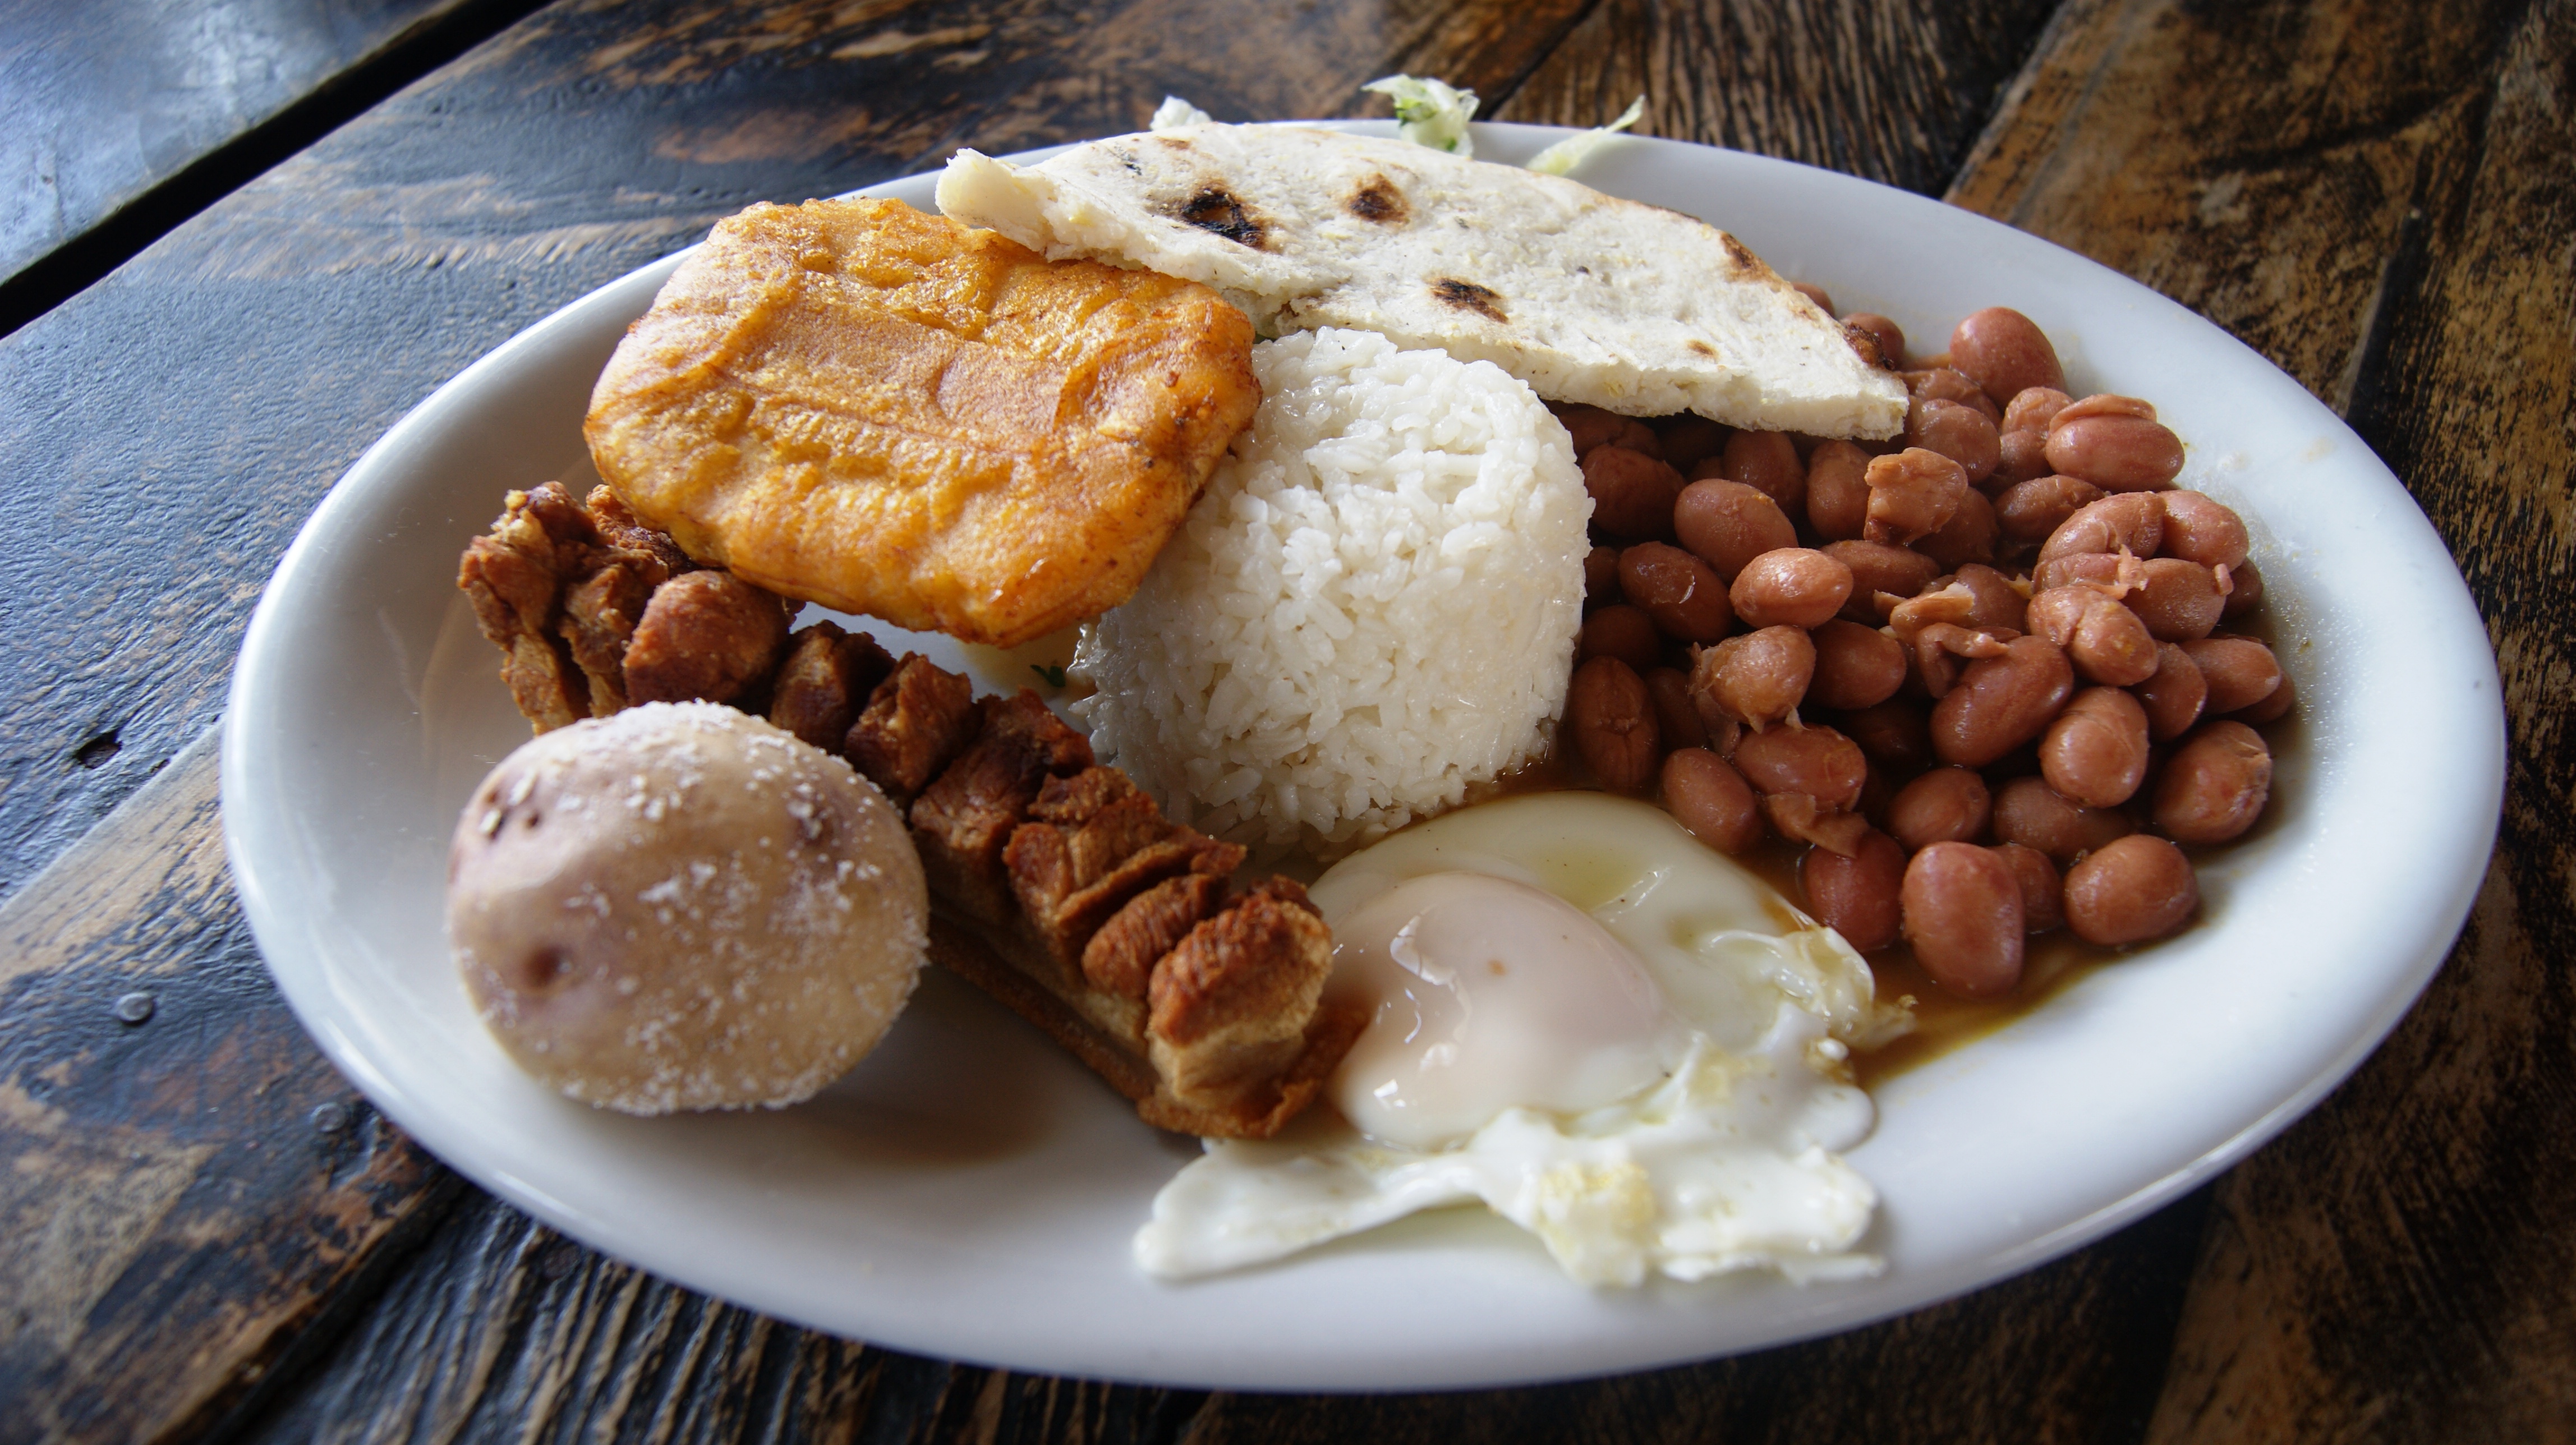 Bandeja paisa, Food, Colombian dishes, Colombian food, Antioquia